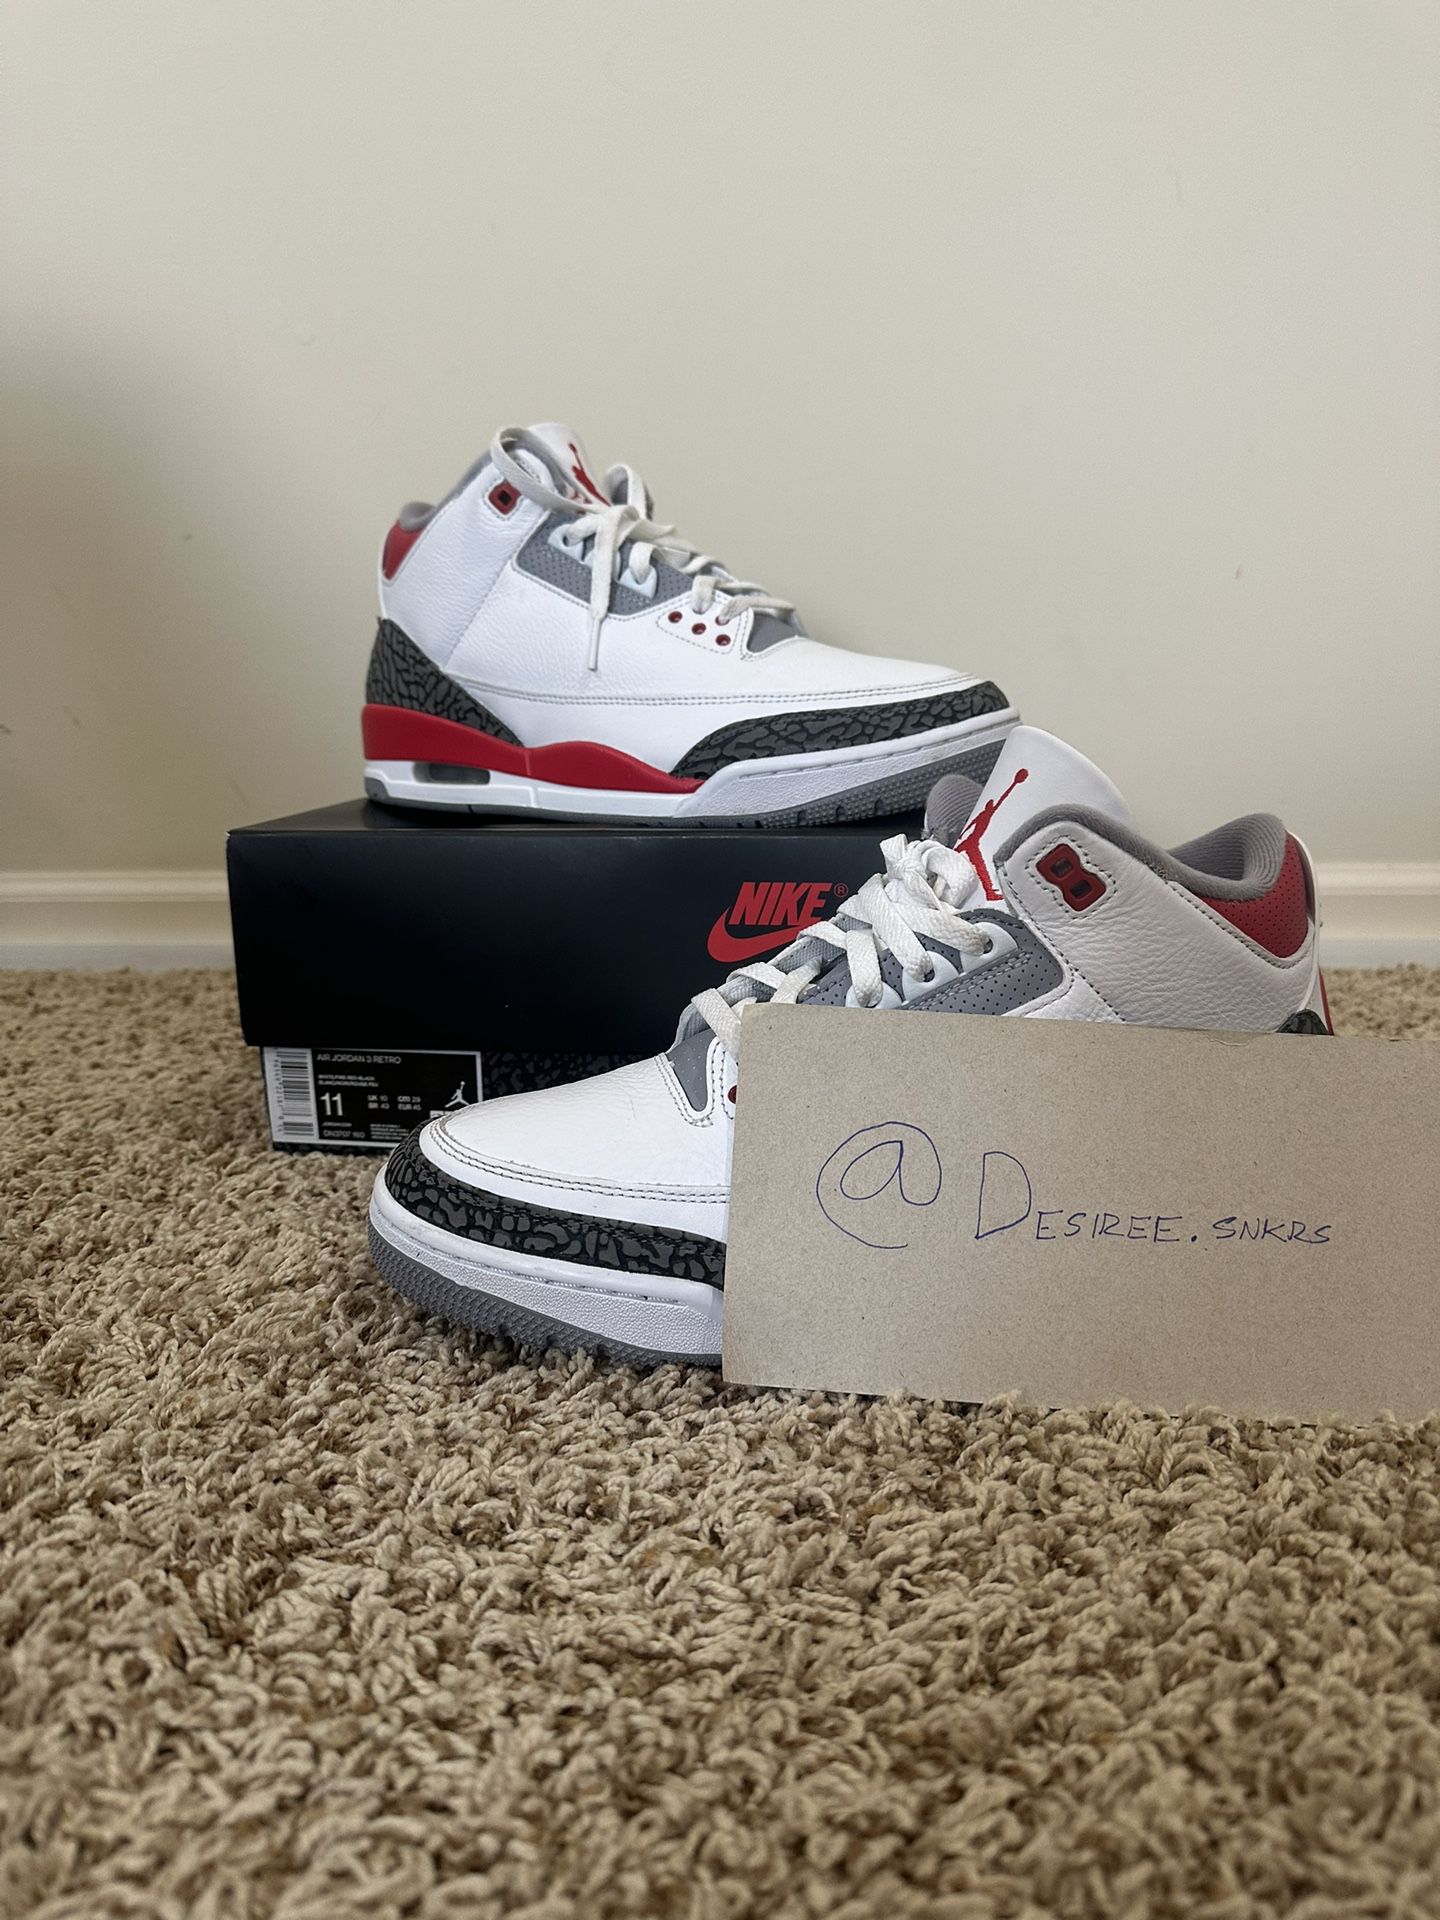 Jordan 3 Retro “Fire Red” Size 11